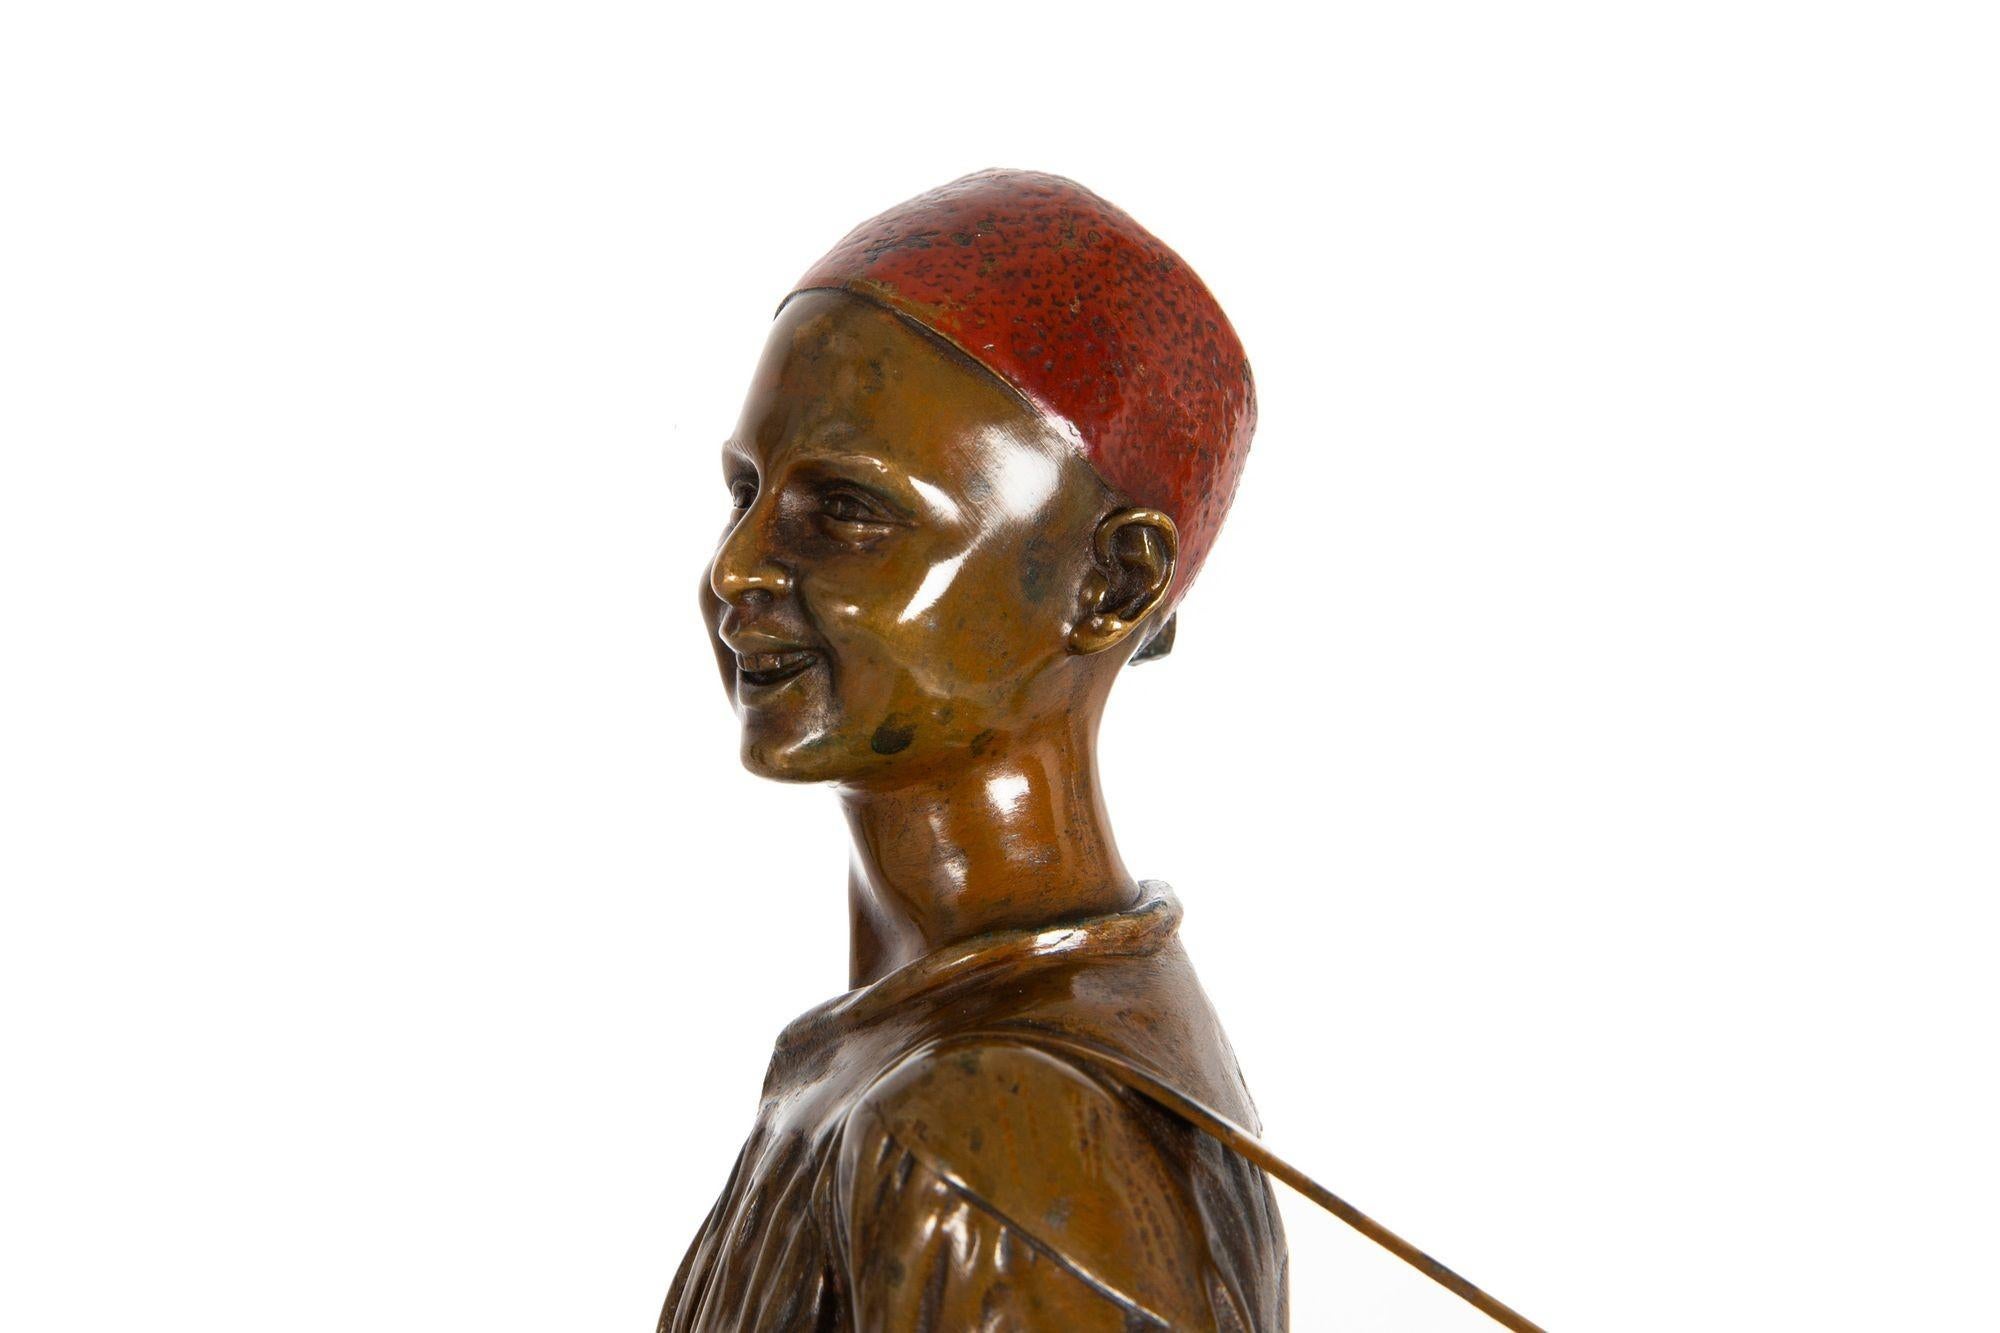 French Orientalist Bronze Sculpture “Arab Shoeshine” after Edouard Drouot For Sale 8